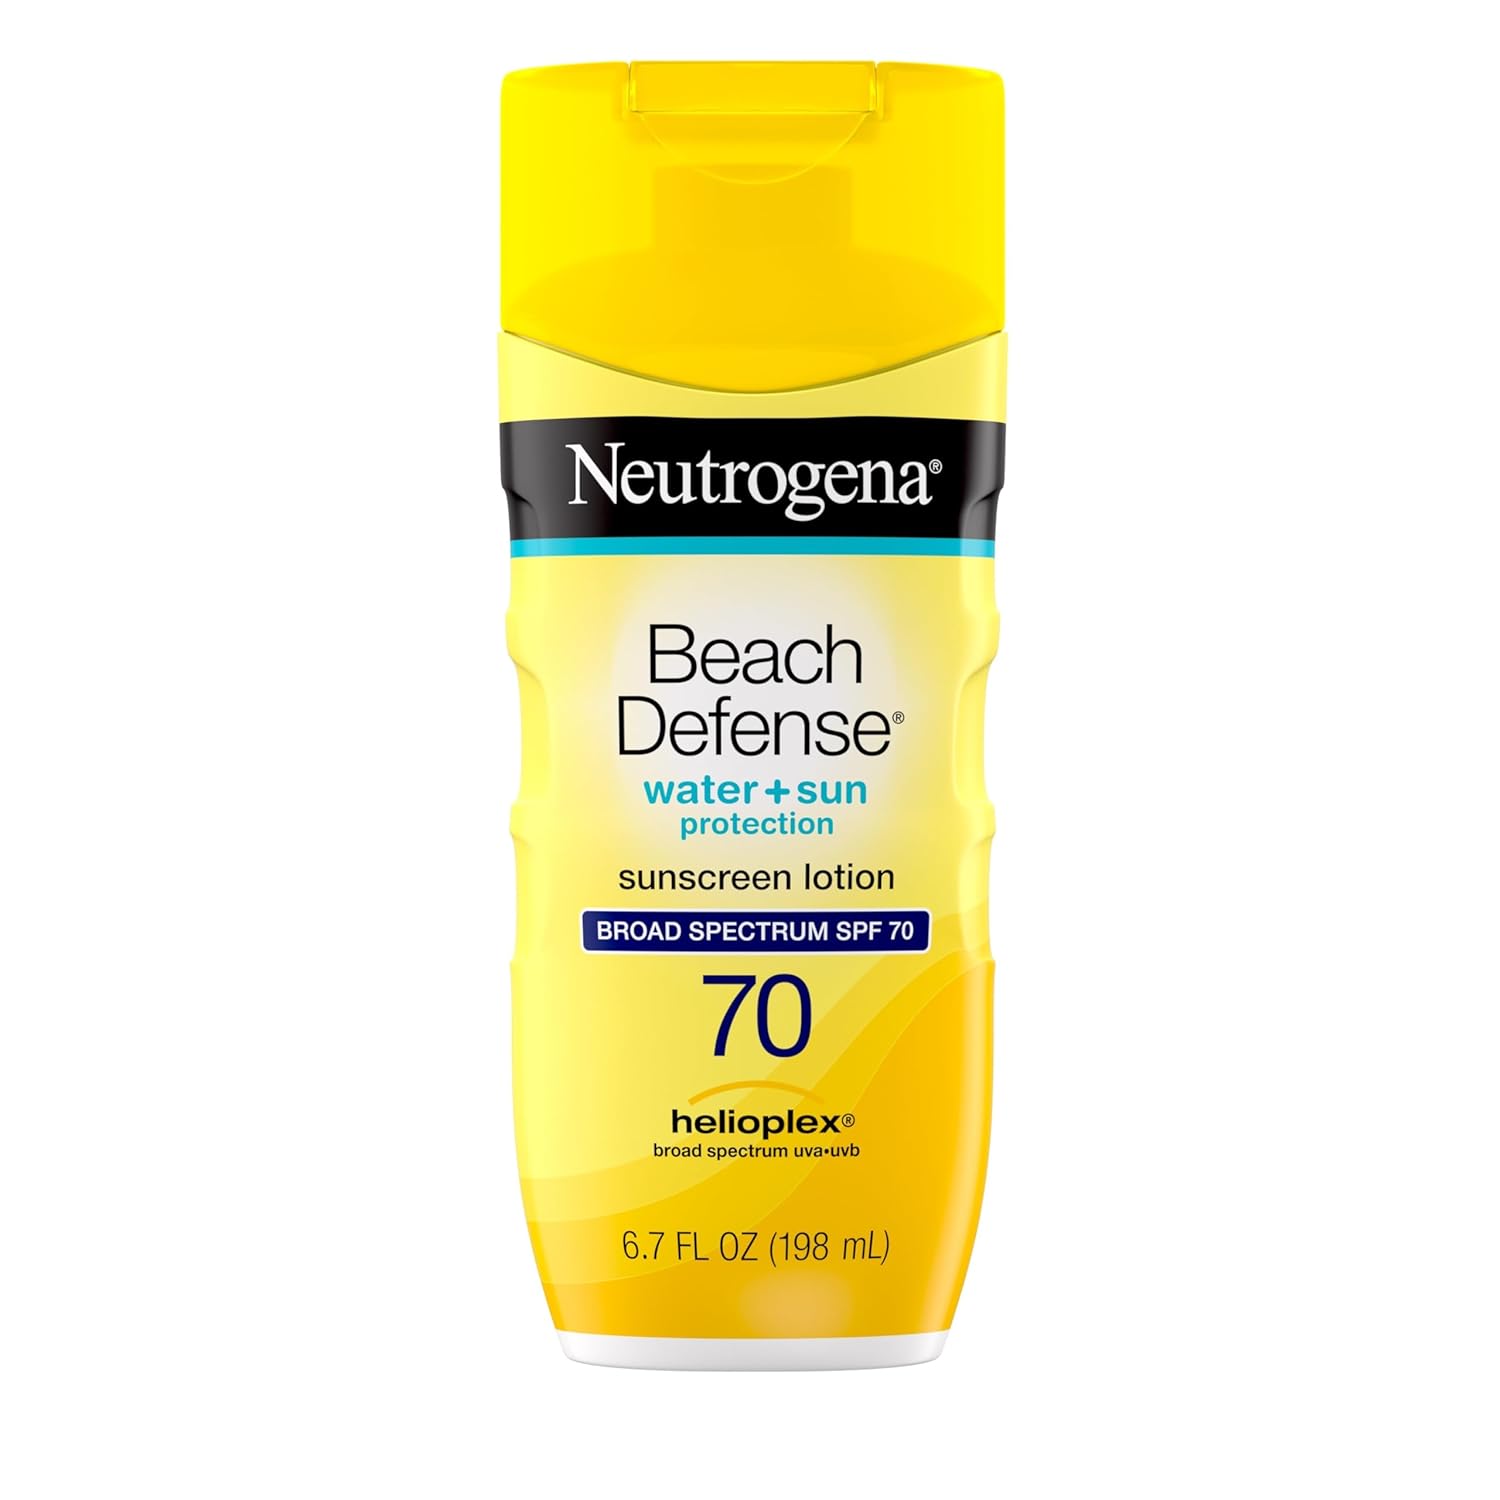 Neutrogena Beach Defense Water-Resistant Sunscreen With SPF 70